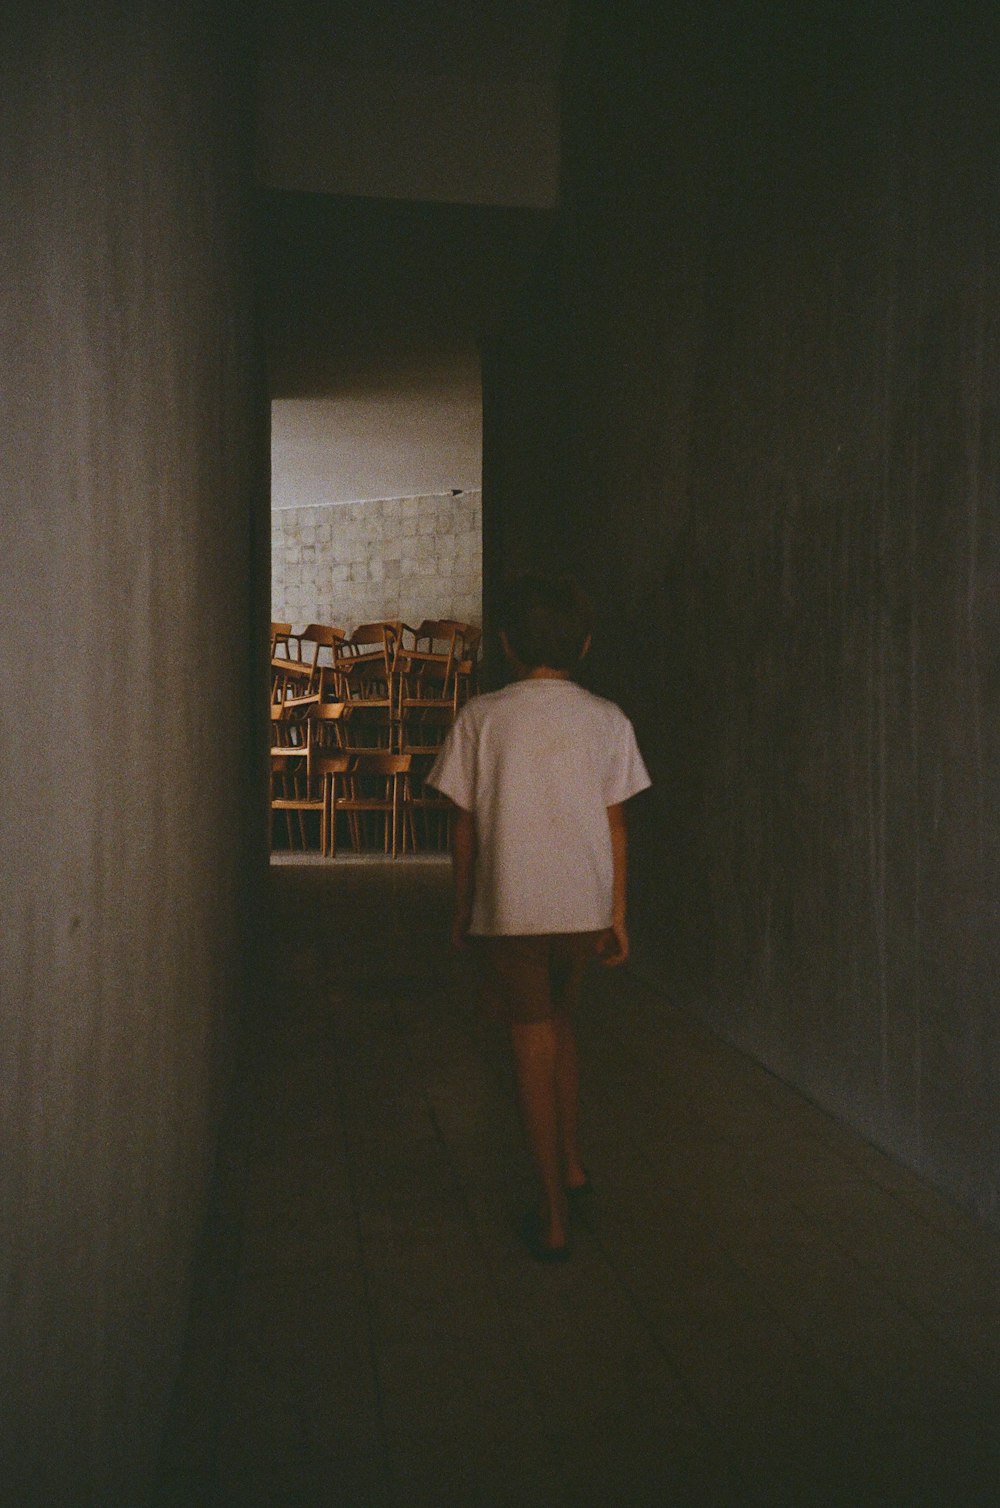 a person is walking down a dark hallway